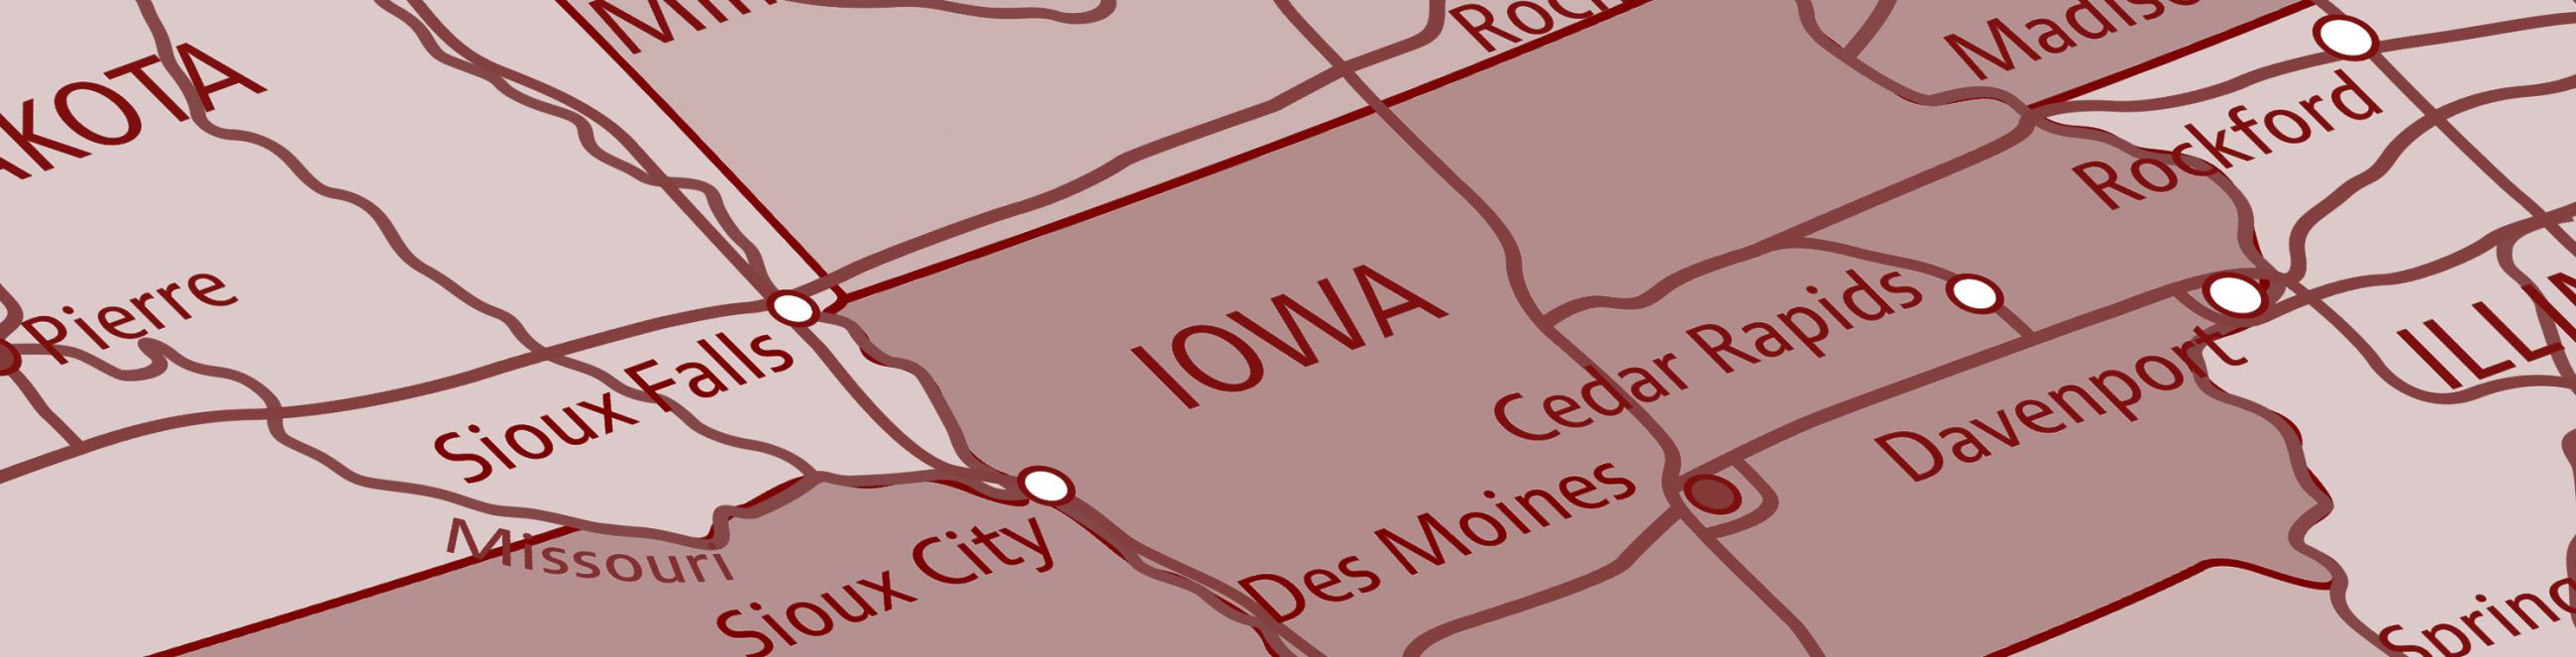 Delta 8 Iowa Facts | Is Delta 8 Legal in Iowa?